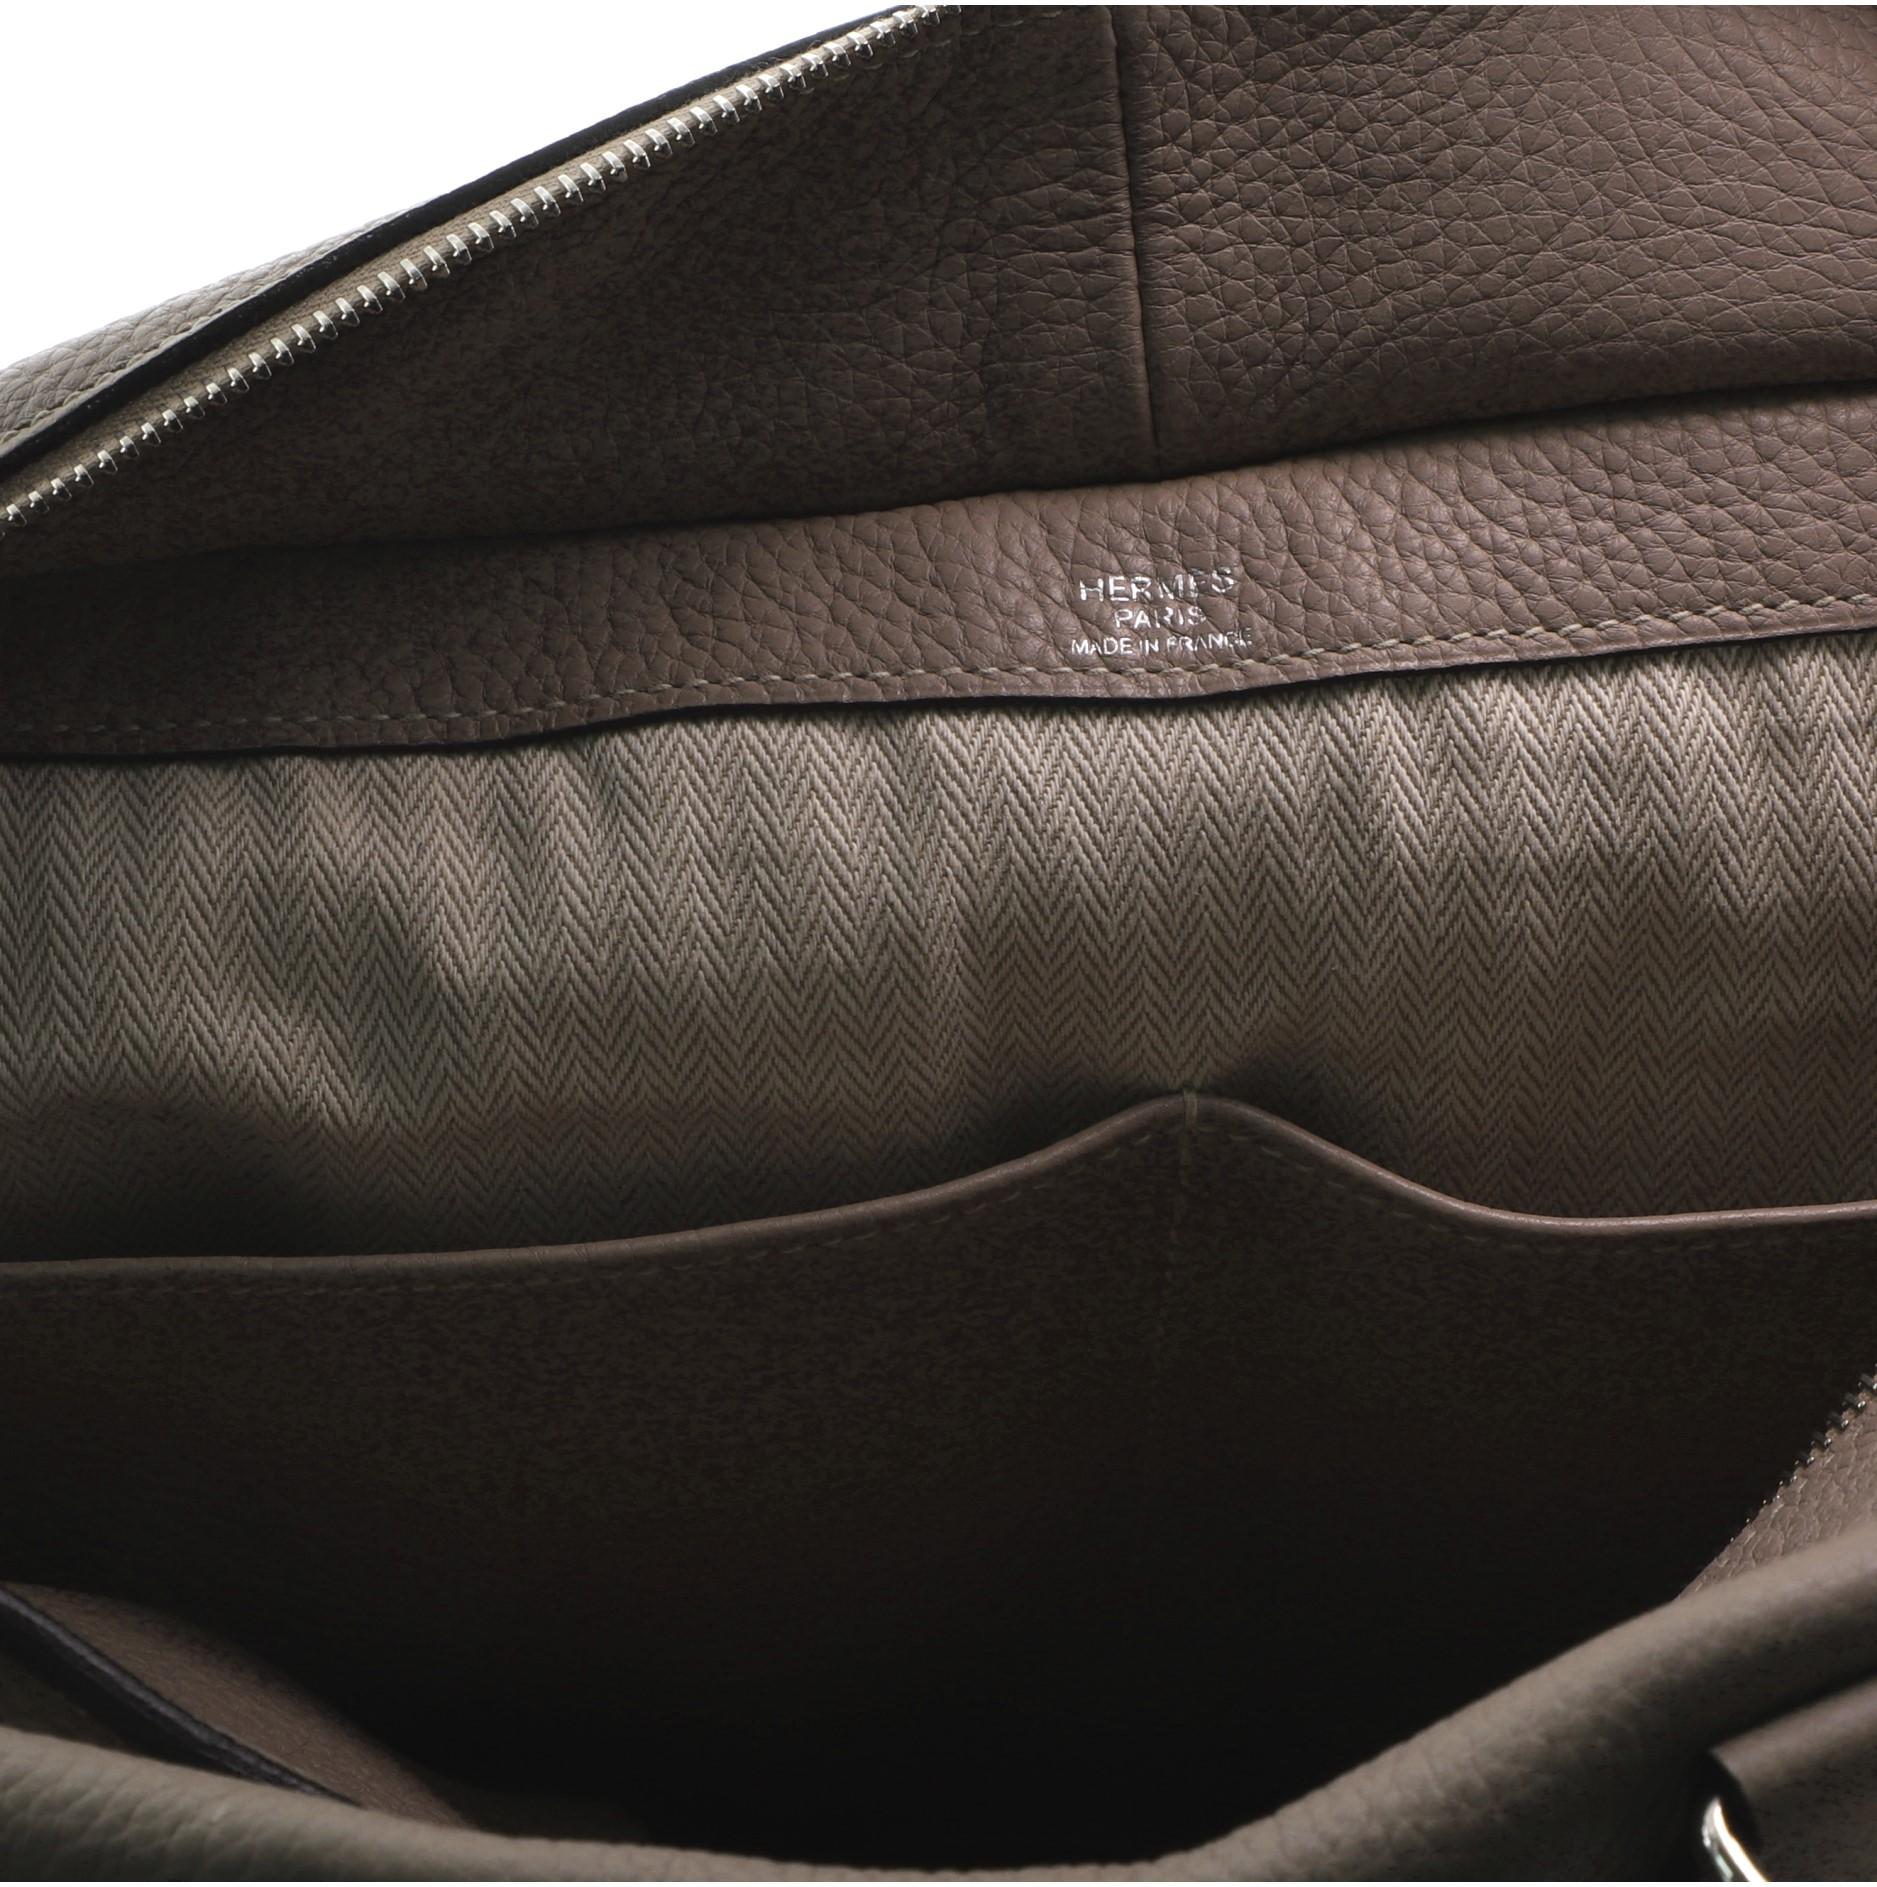 Hermes Pursangle Bag Leather 35 7